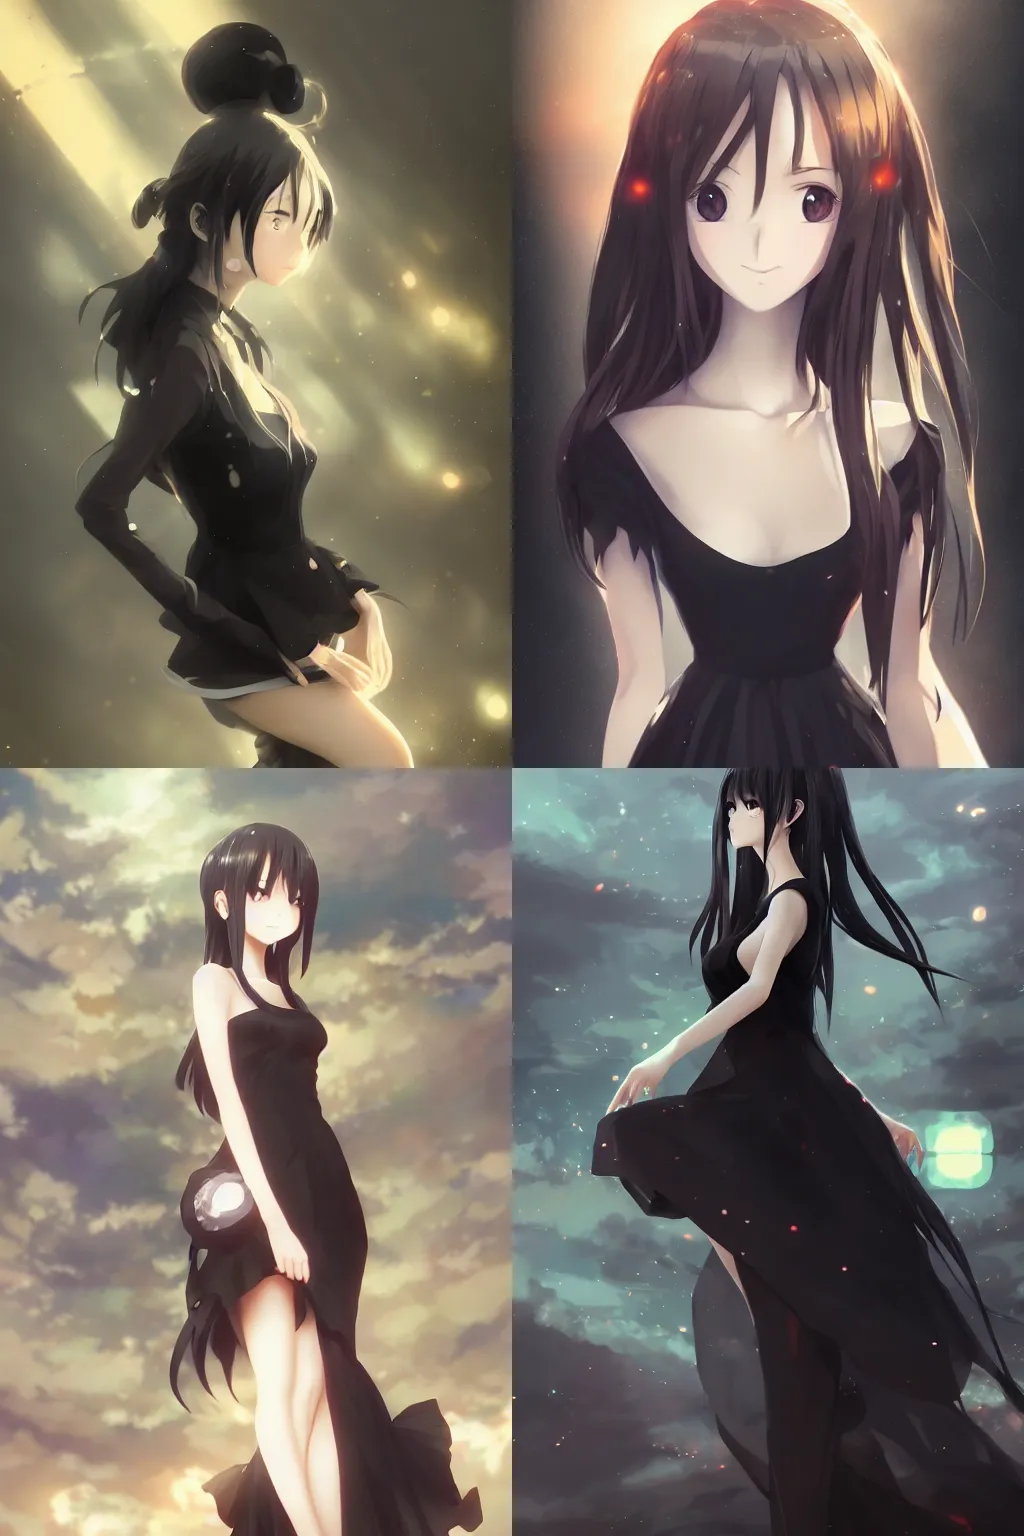 Prompt: anime girl wearing a black dress, anime style, fantasy art by makoto shinkai, by wenjun lin, digital drawing, gorgeous face, octane render